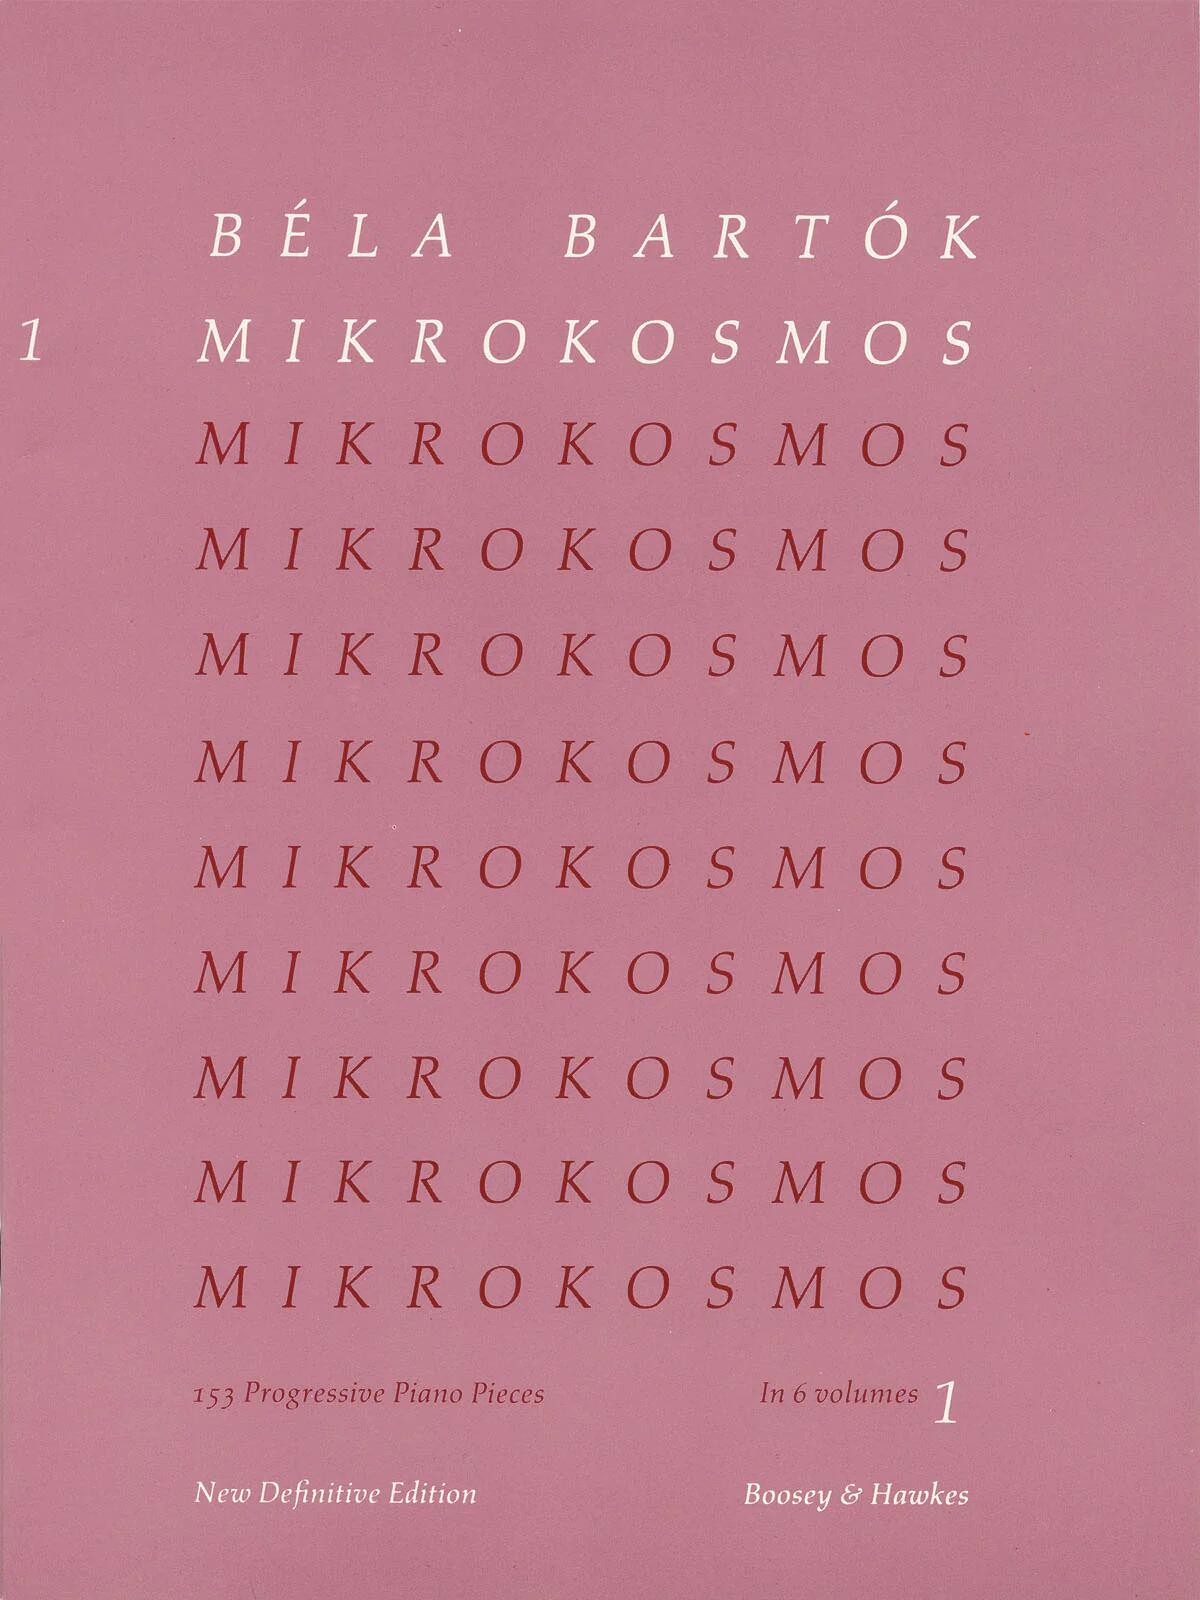 Boosey and Hawkes Mikrokosmos vol. 1 : photo 1